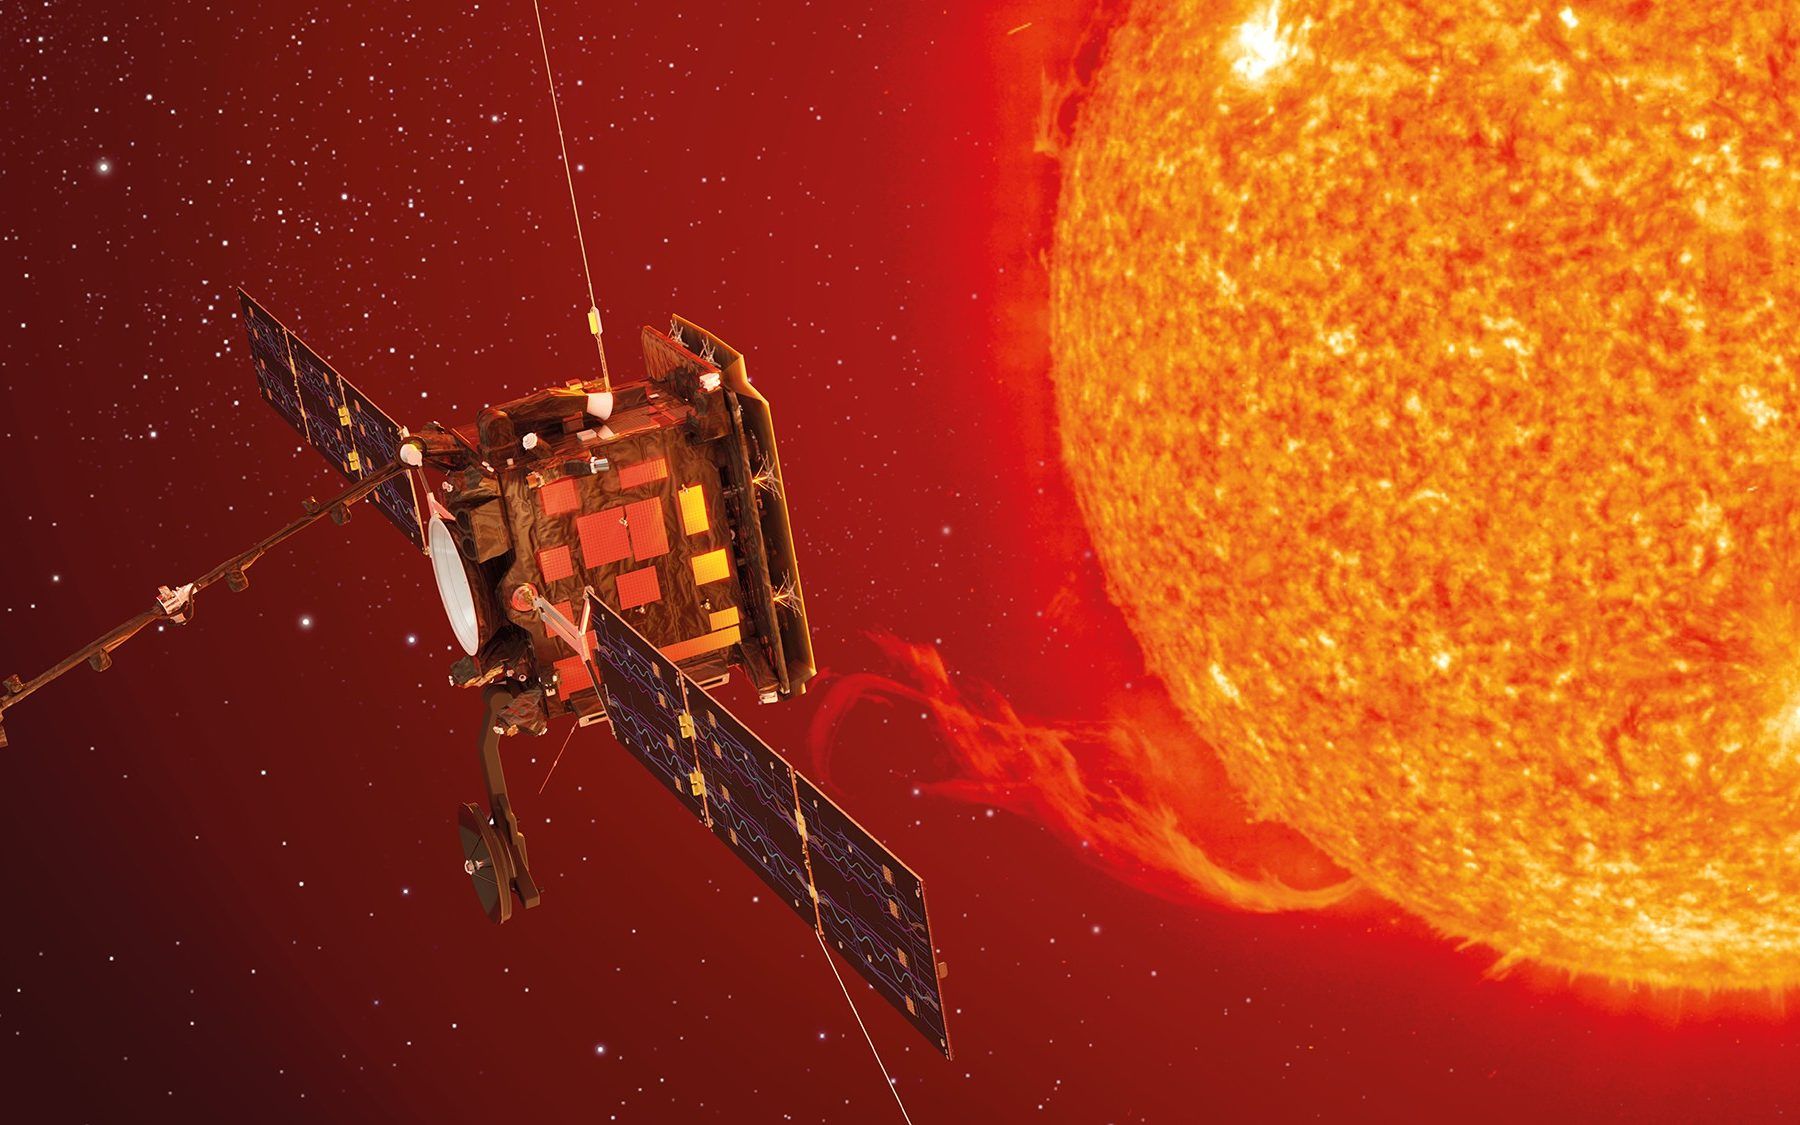 Origin of the Sun's solar storms discovered in scientific breakthrough